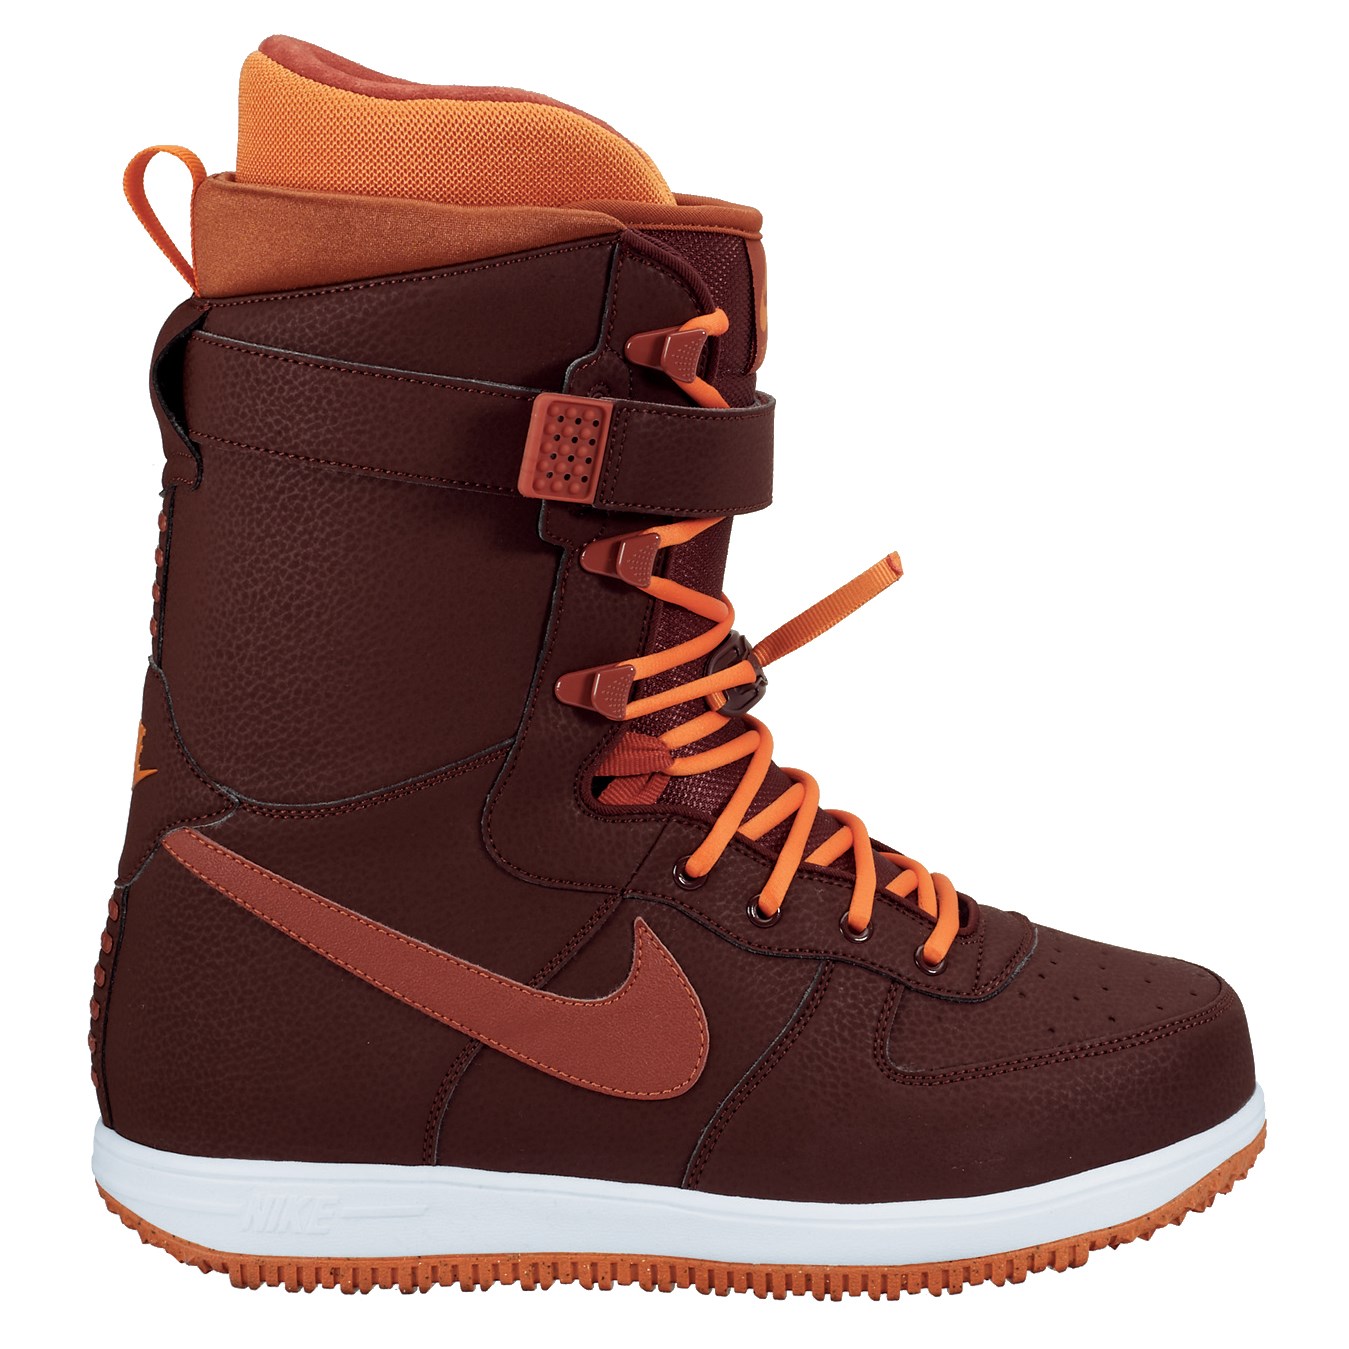 Dar una vuelta Inclinado Proporcional Nike SB Zoom Force 1 Snowboard Boots 2014 | evo